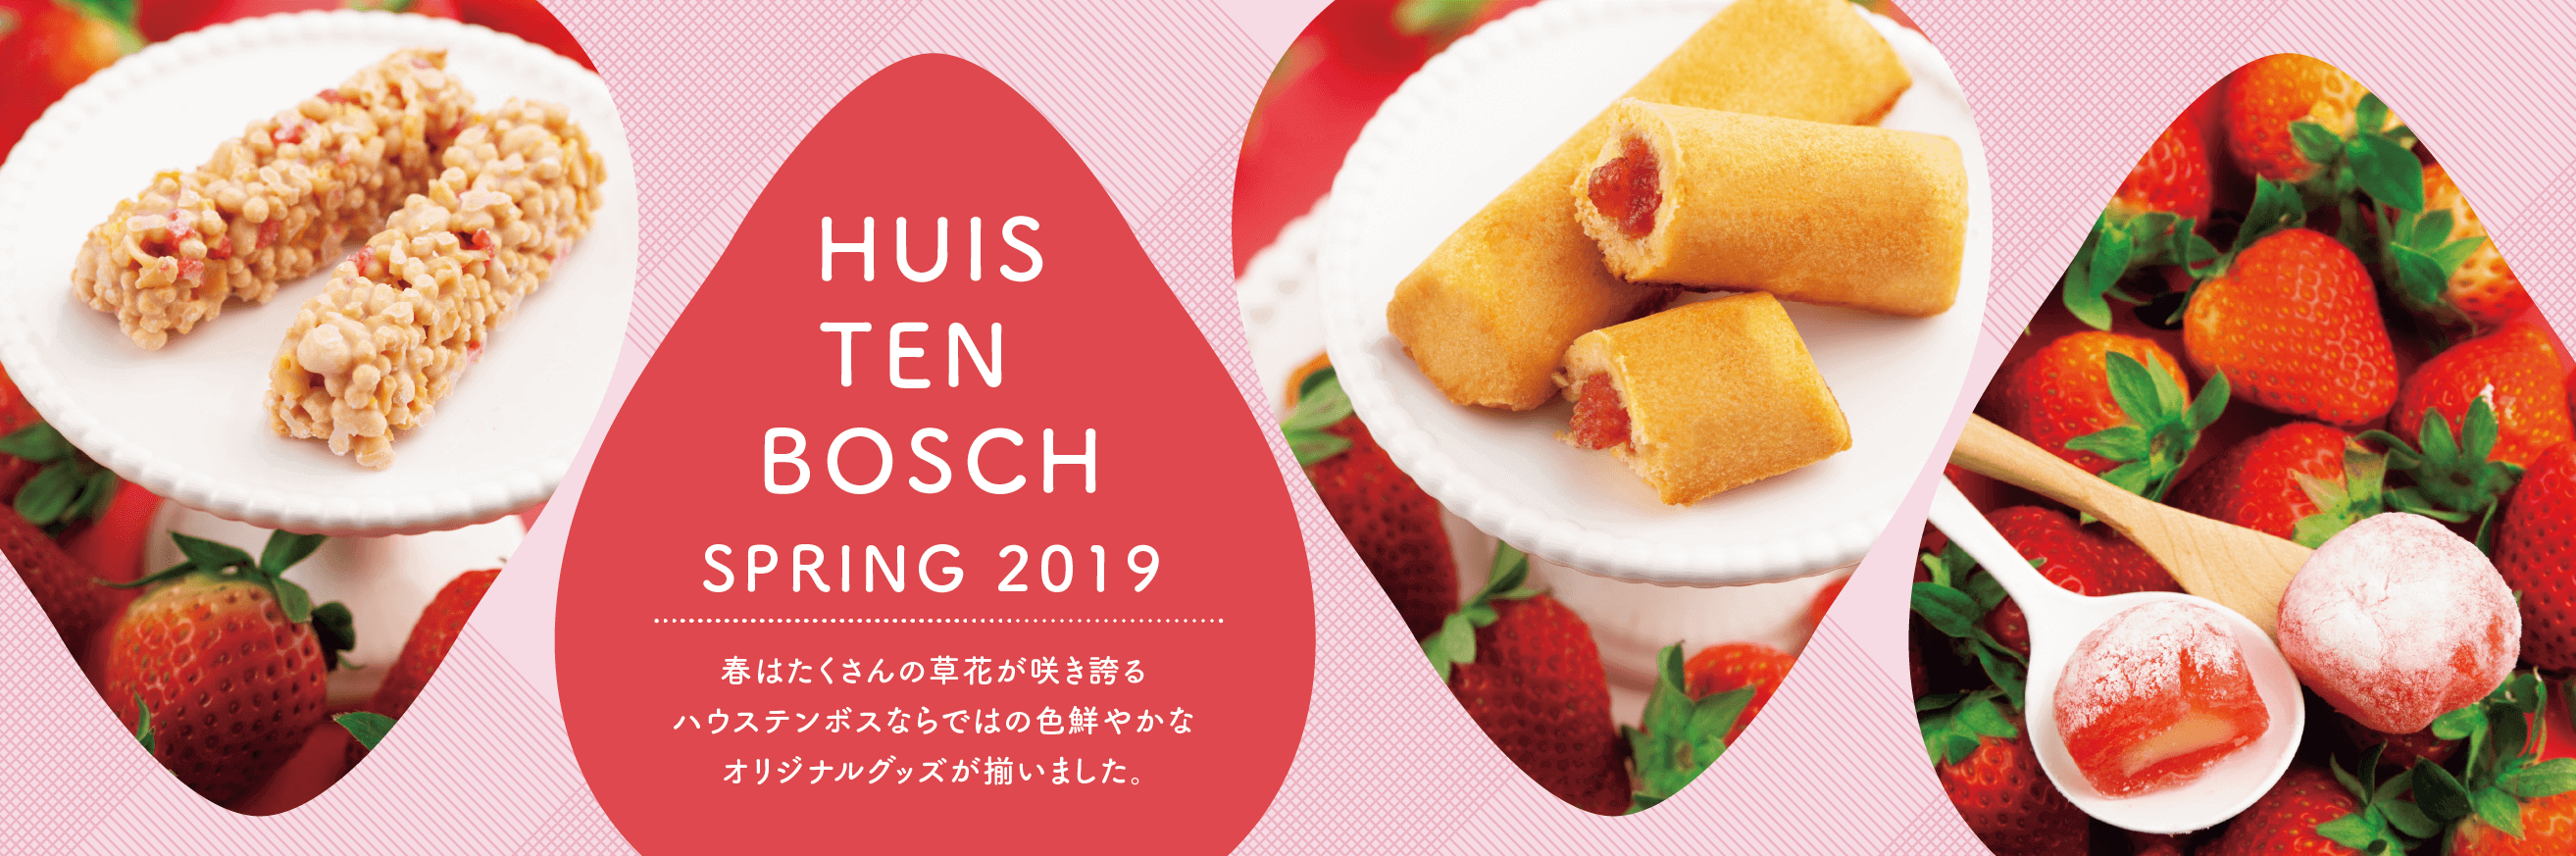 HUIS TEN BOSCH SPRING 2019春季是许多鲜花盛开的豪斯登堡被设置独特的多彩原创商品。